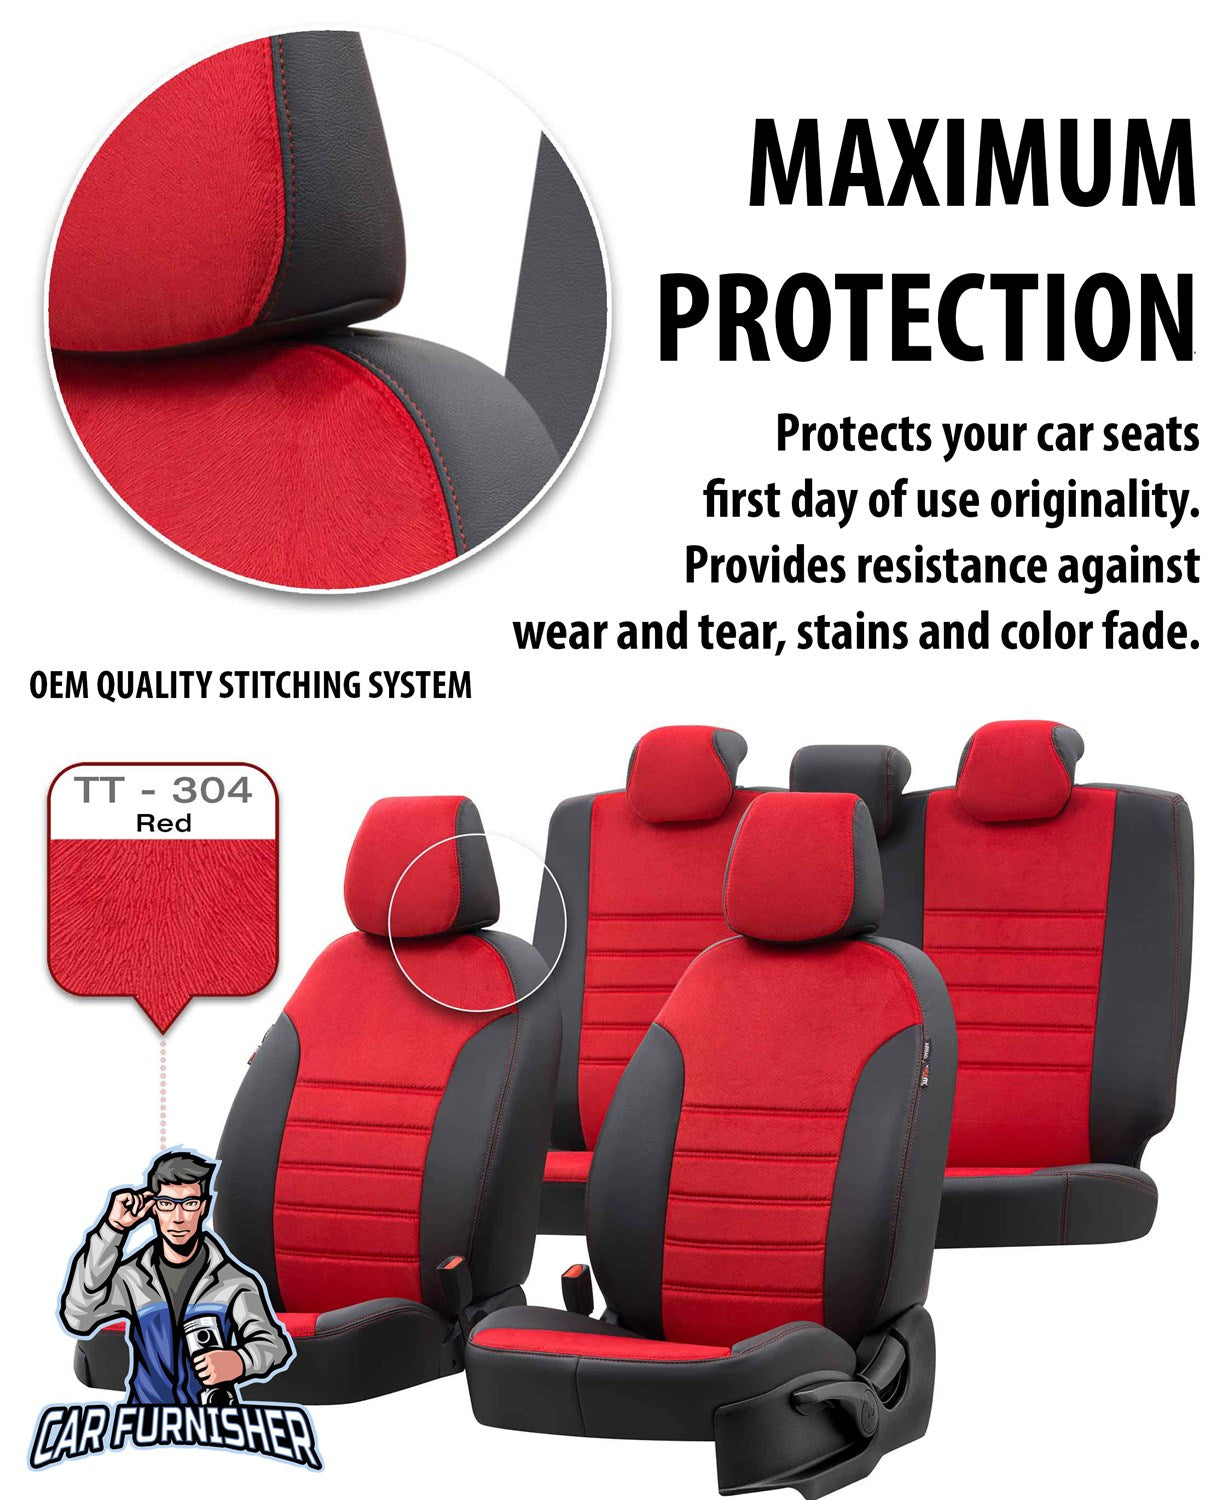 Daihatsu Materia Car Seat Covers 2007-2010 London Design Black Full Set (5 Seats + Handrest) Leather & Fabric